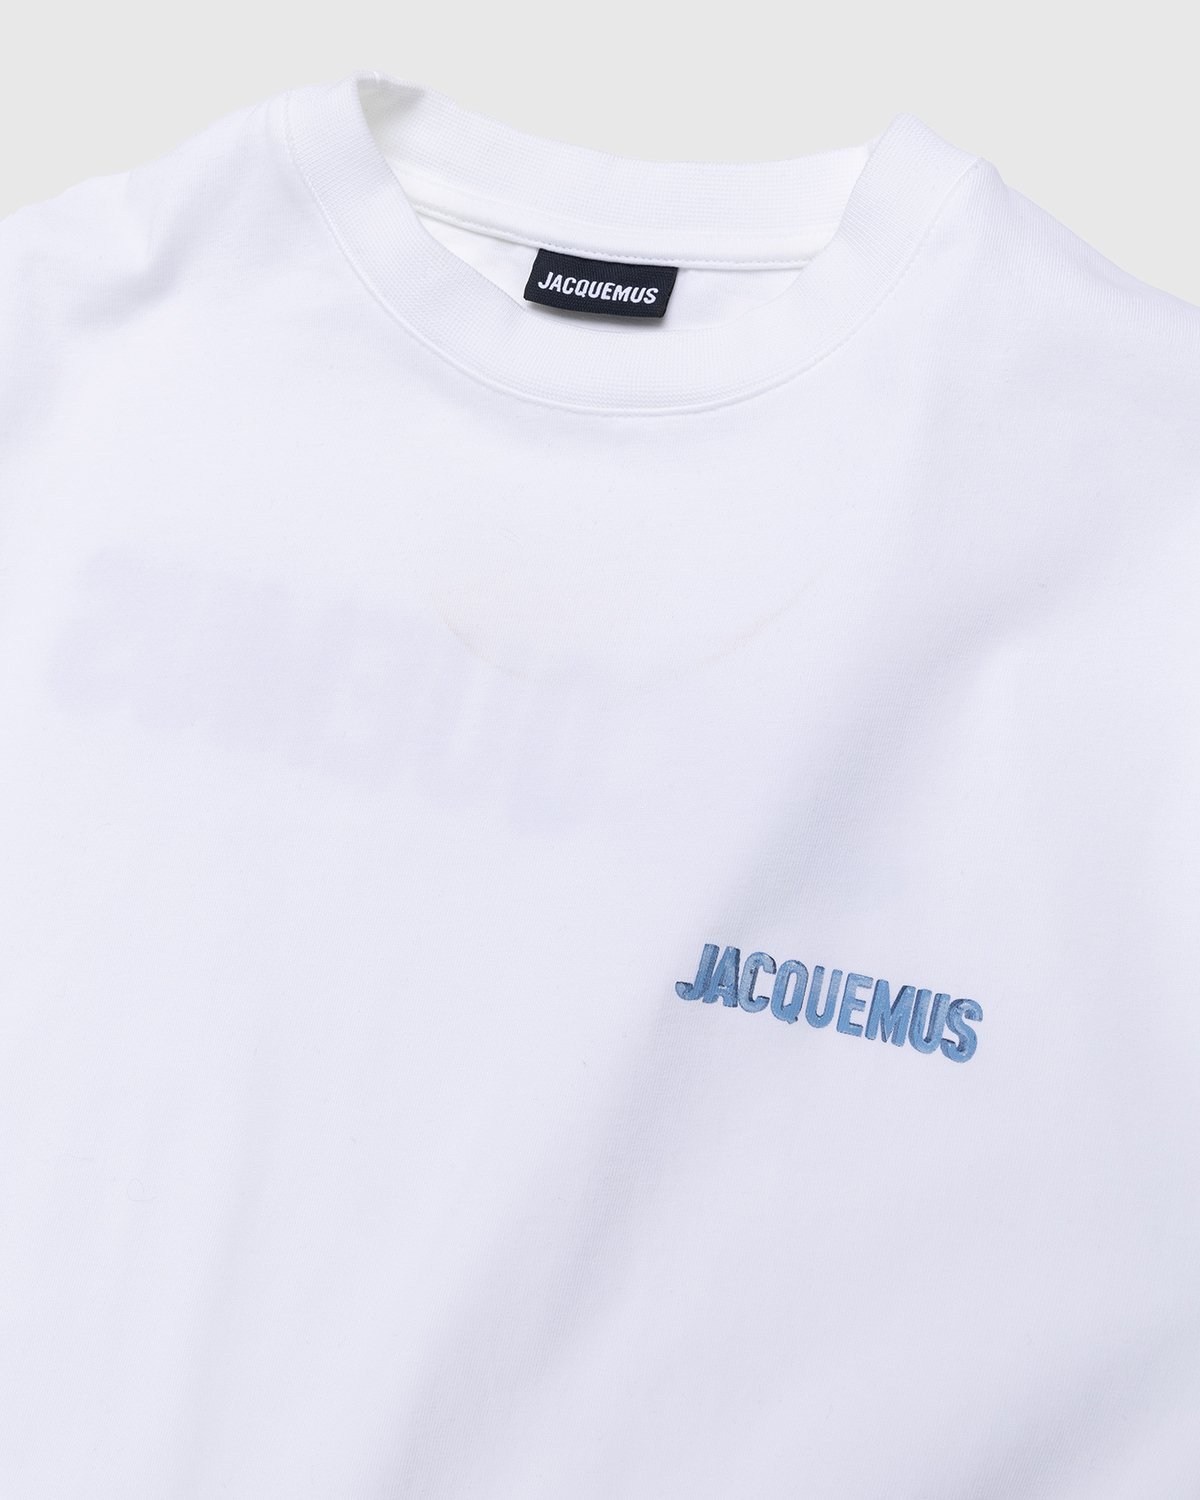 JACQUEMUS - Le T-Shirt Gelo Print Ice Jacquemus White - Clothing - White - Image 3